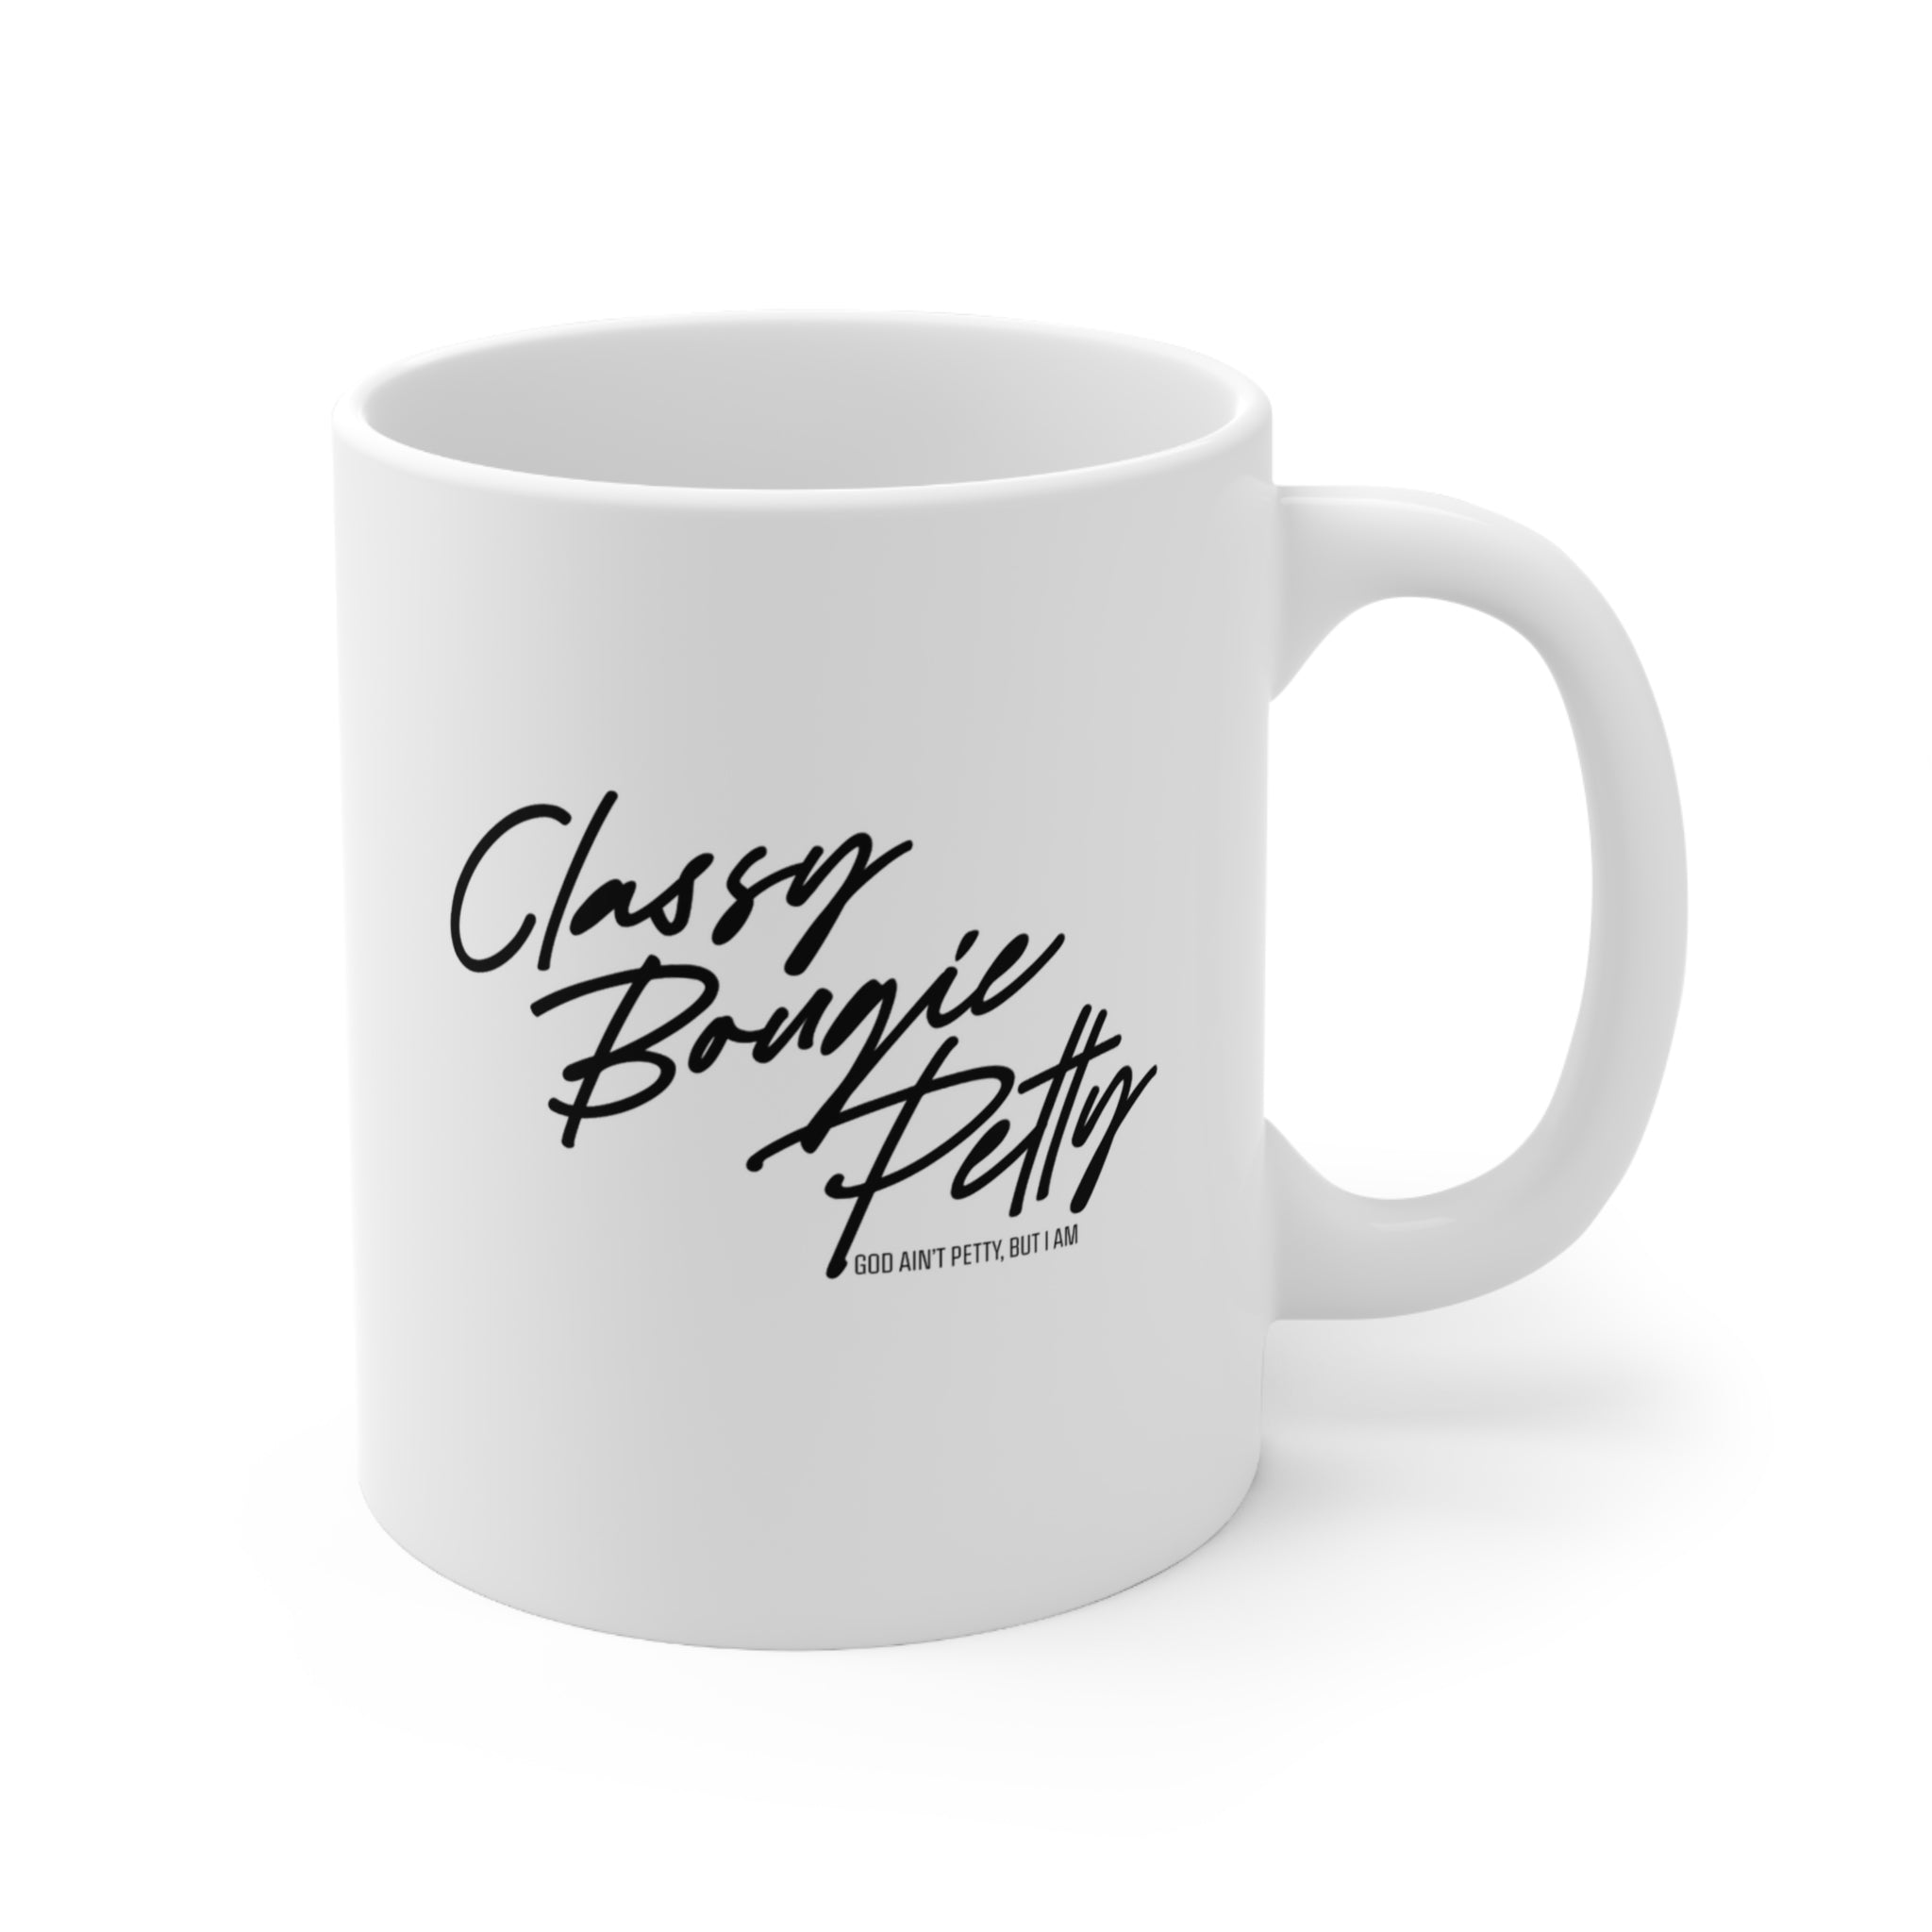 Classy Bougie Petty Mug 11oz (White/Black)-Mug-The Original God Ain't Petty But I Am